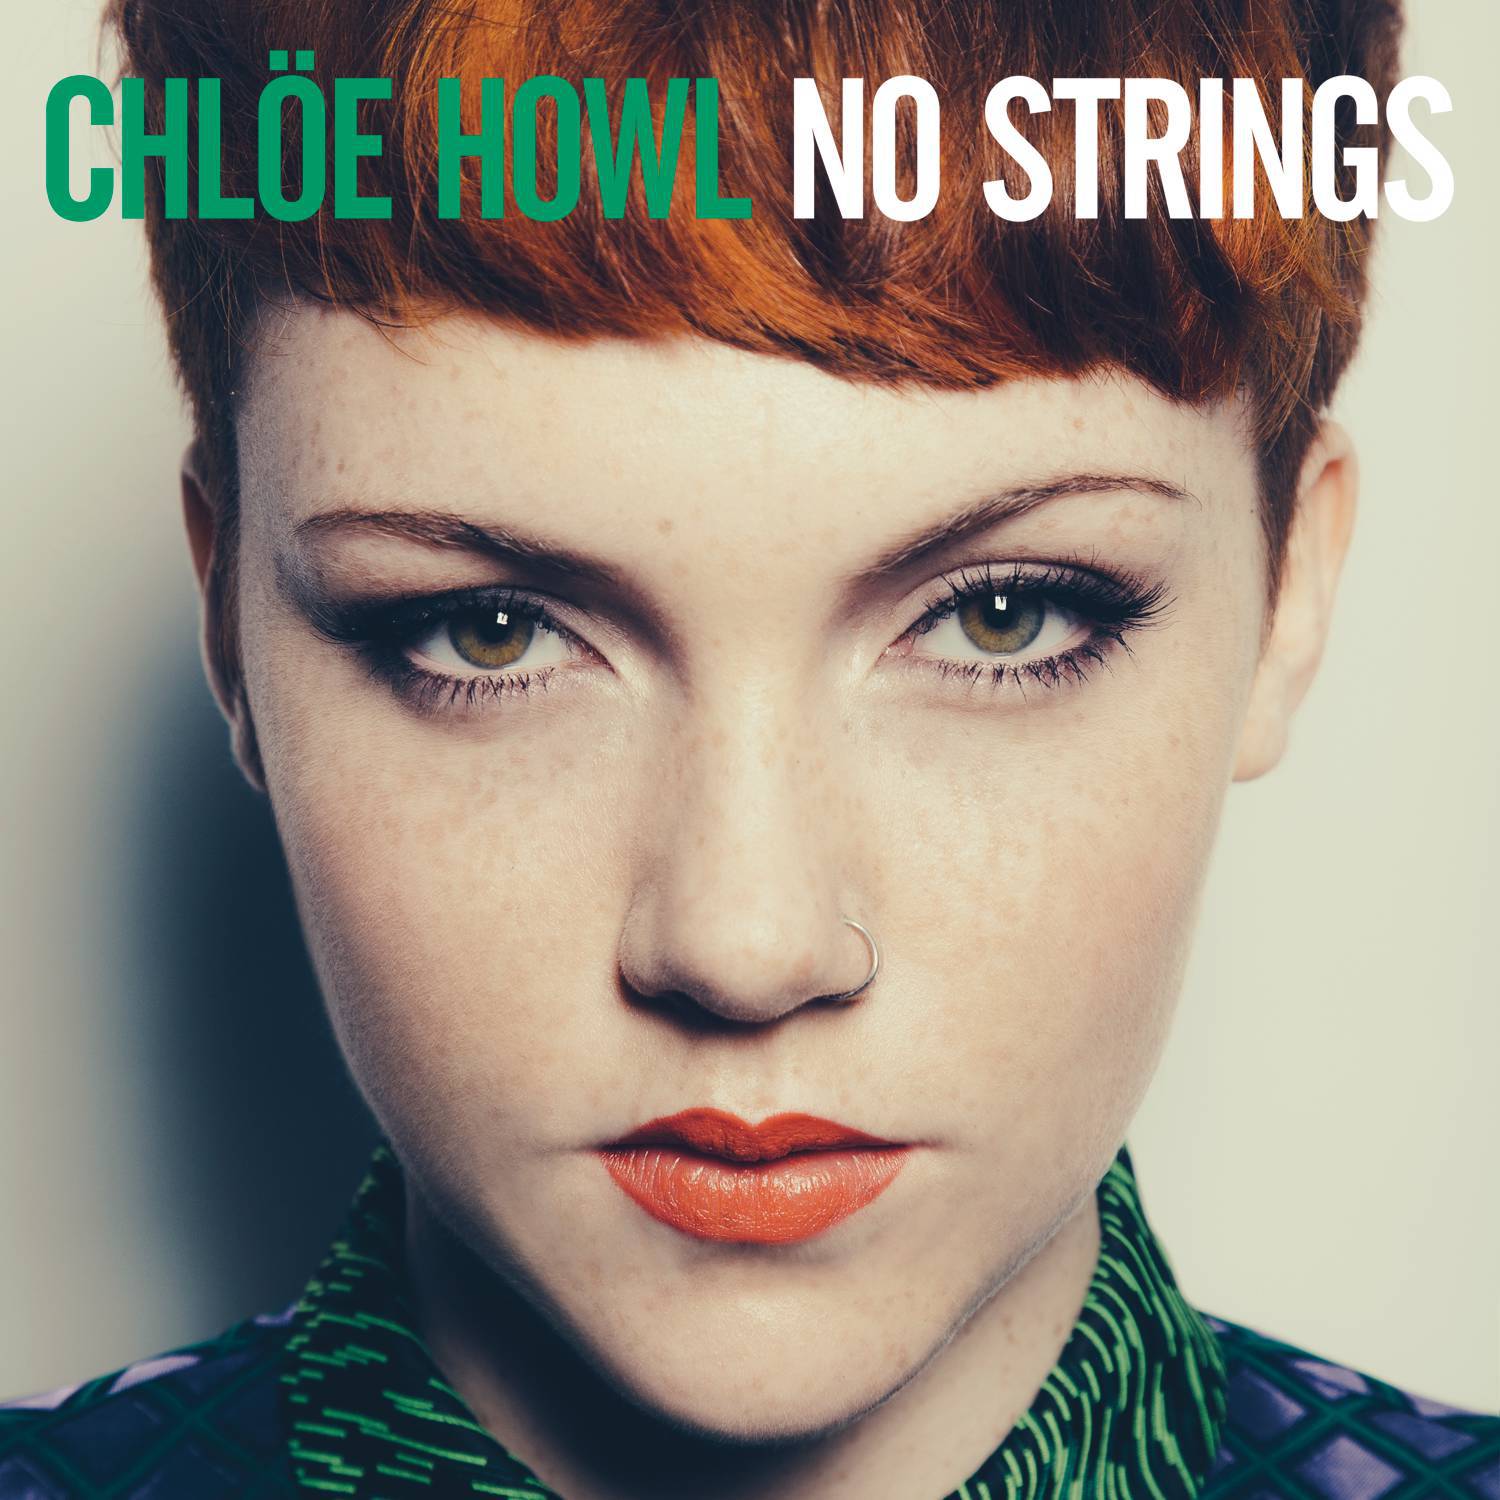 Chlöe Howl - No Strings (Moto Blanco Remix)